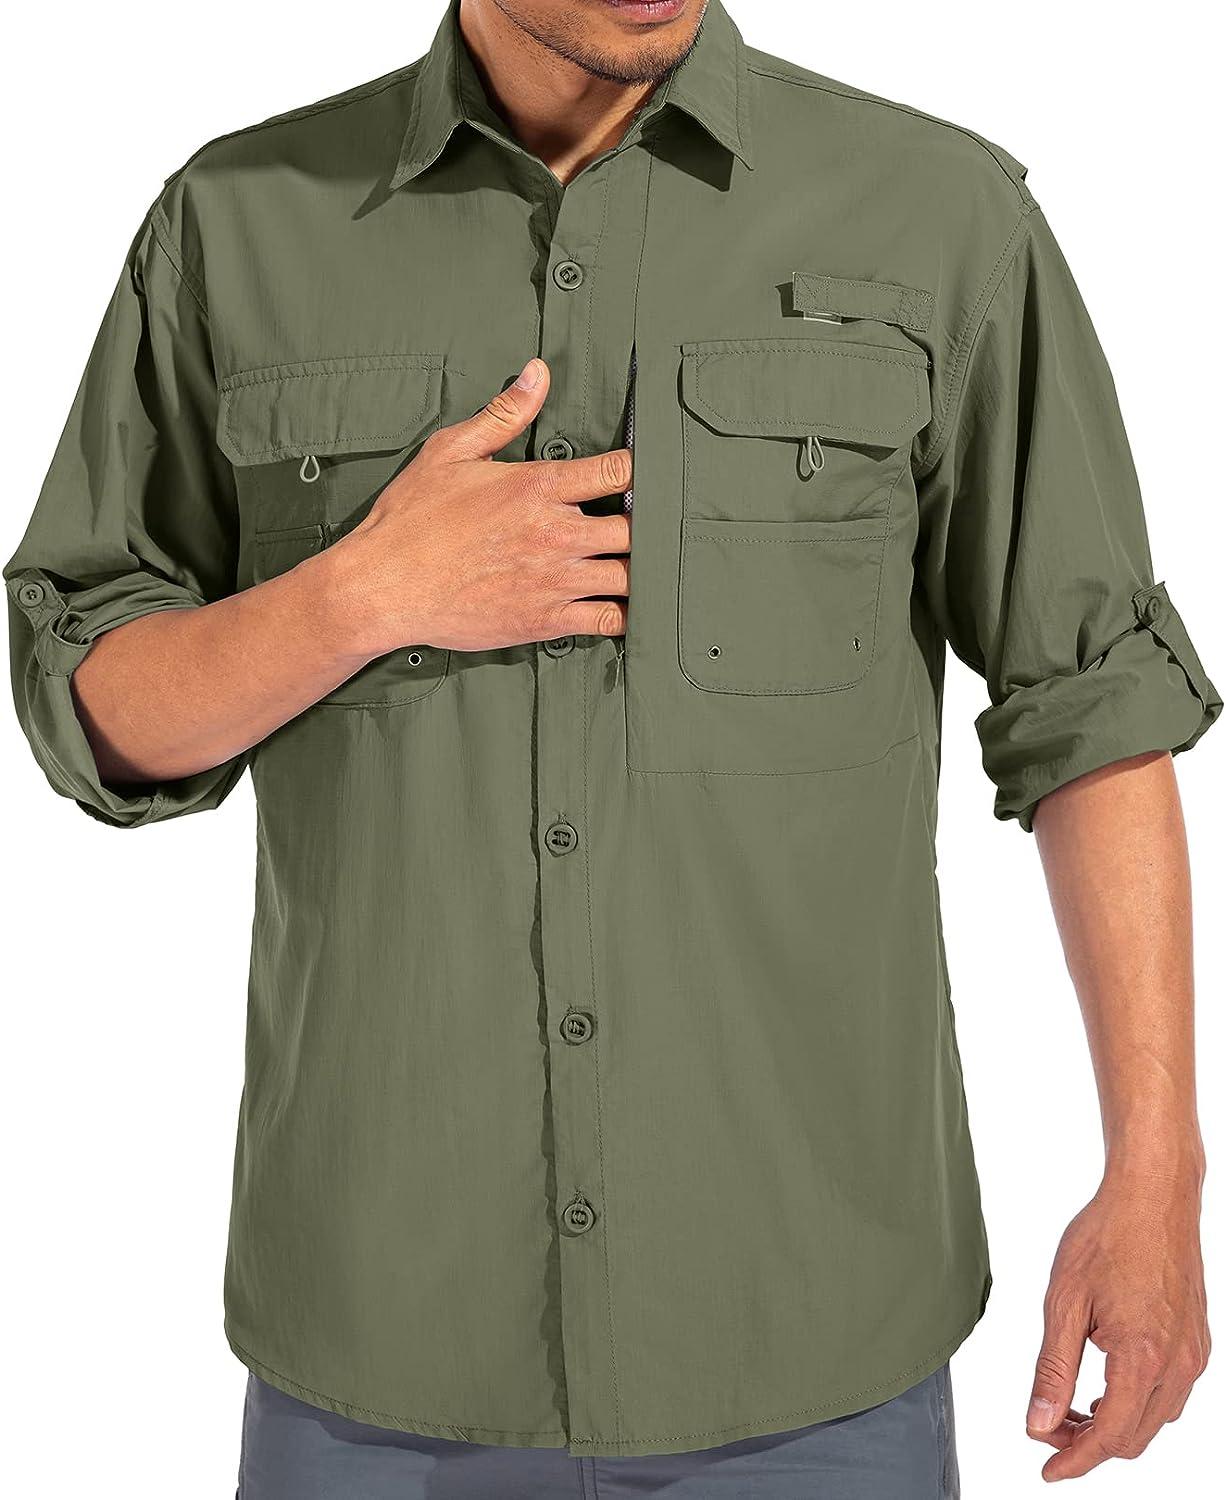 linlon Mens Safari Shirts Long Sleeve UV Protection Hiking Fishing